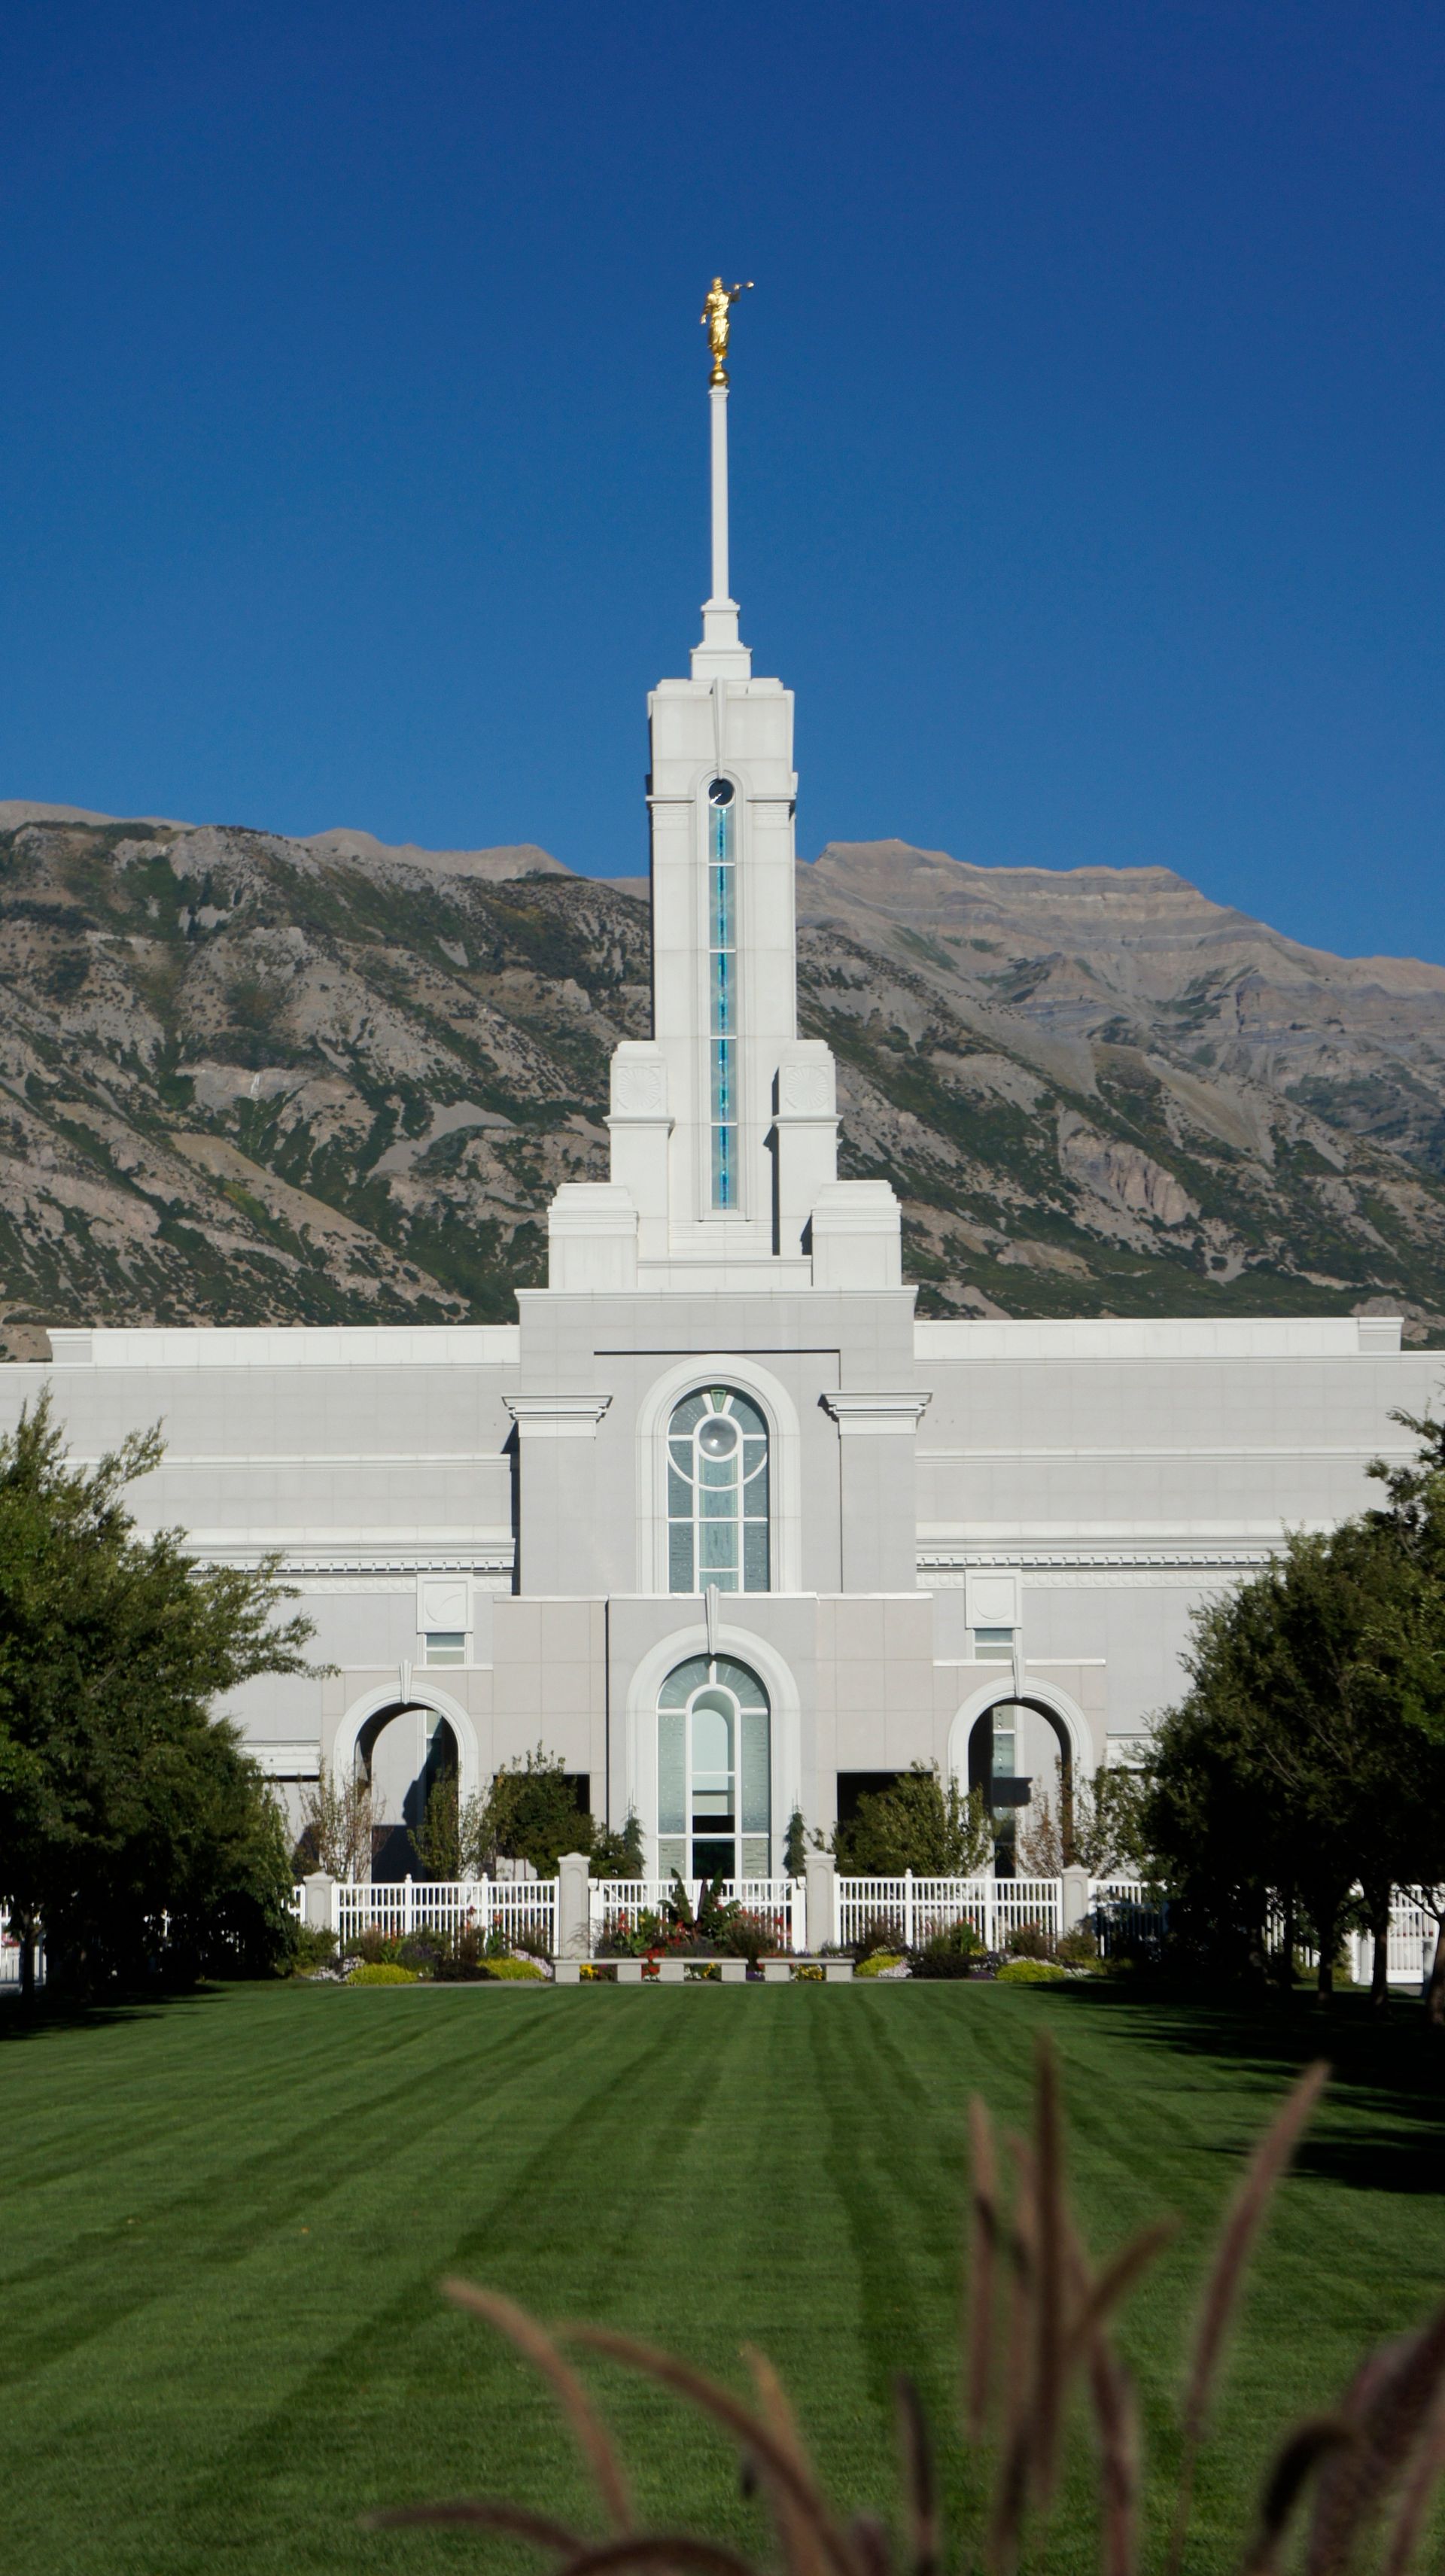 The Mount Timpanogos Utah Temple entrance, including scenery.